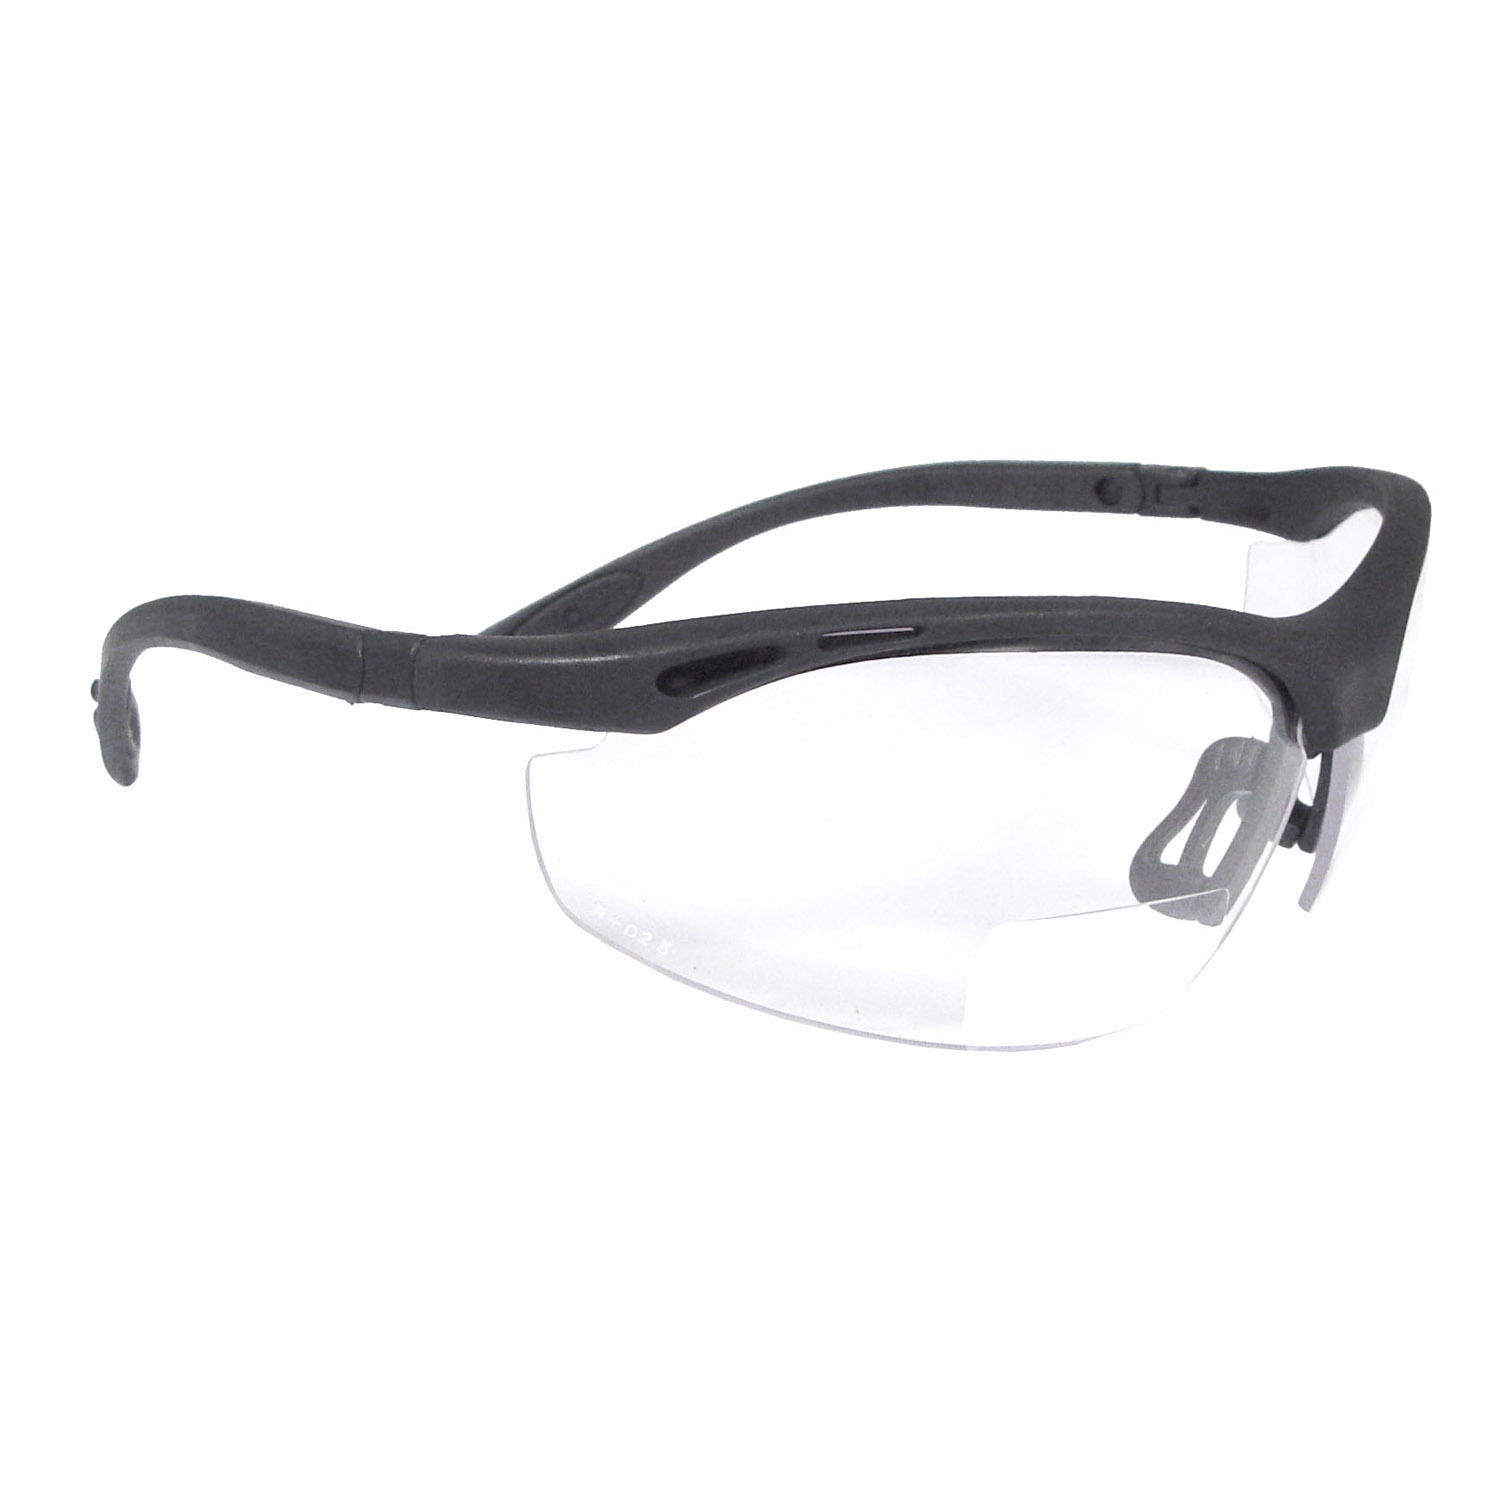 Cheaters® Bi-Focal Eyewear - Black Frame - Clear Lens - 3.0 Diopter - Bifocals